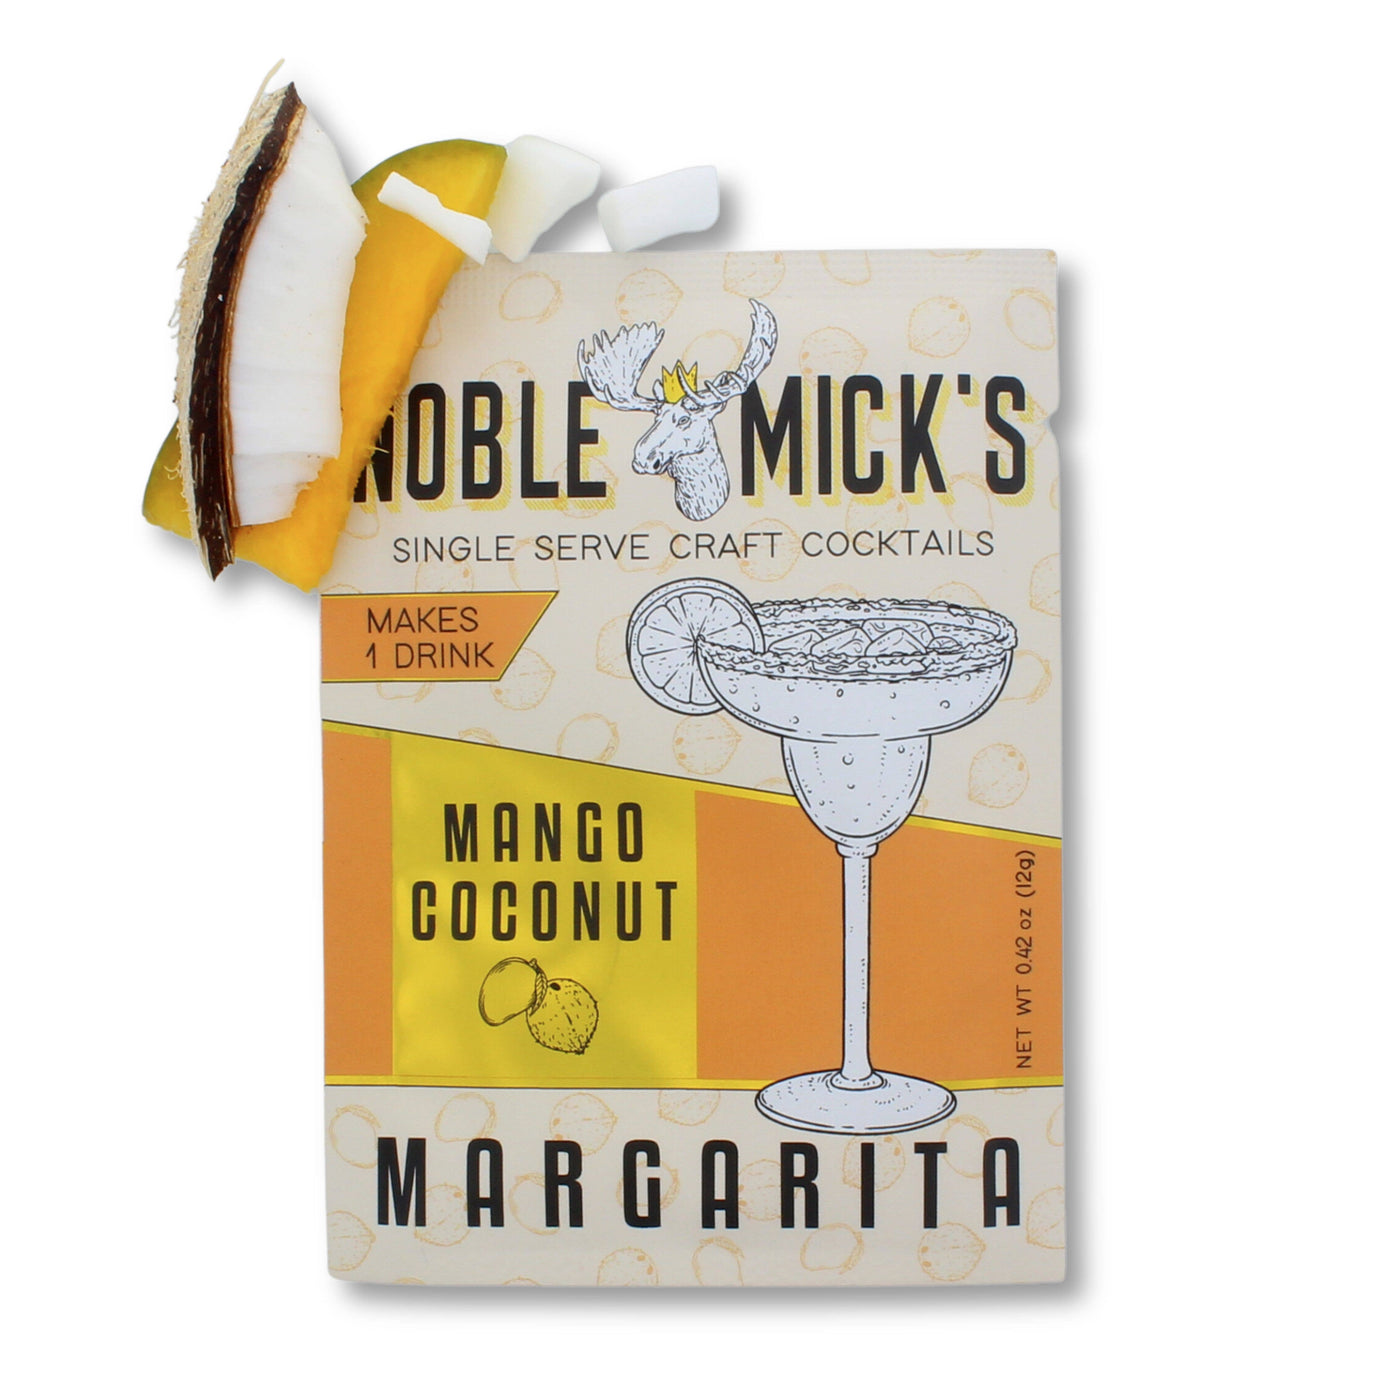 NOBLE MICK'S - Single Serve Craft Cocktails - Mango Coconut Margarita Single Serve Craft Cocktail